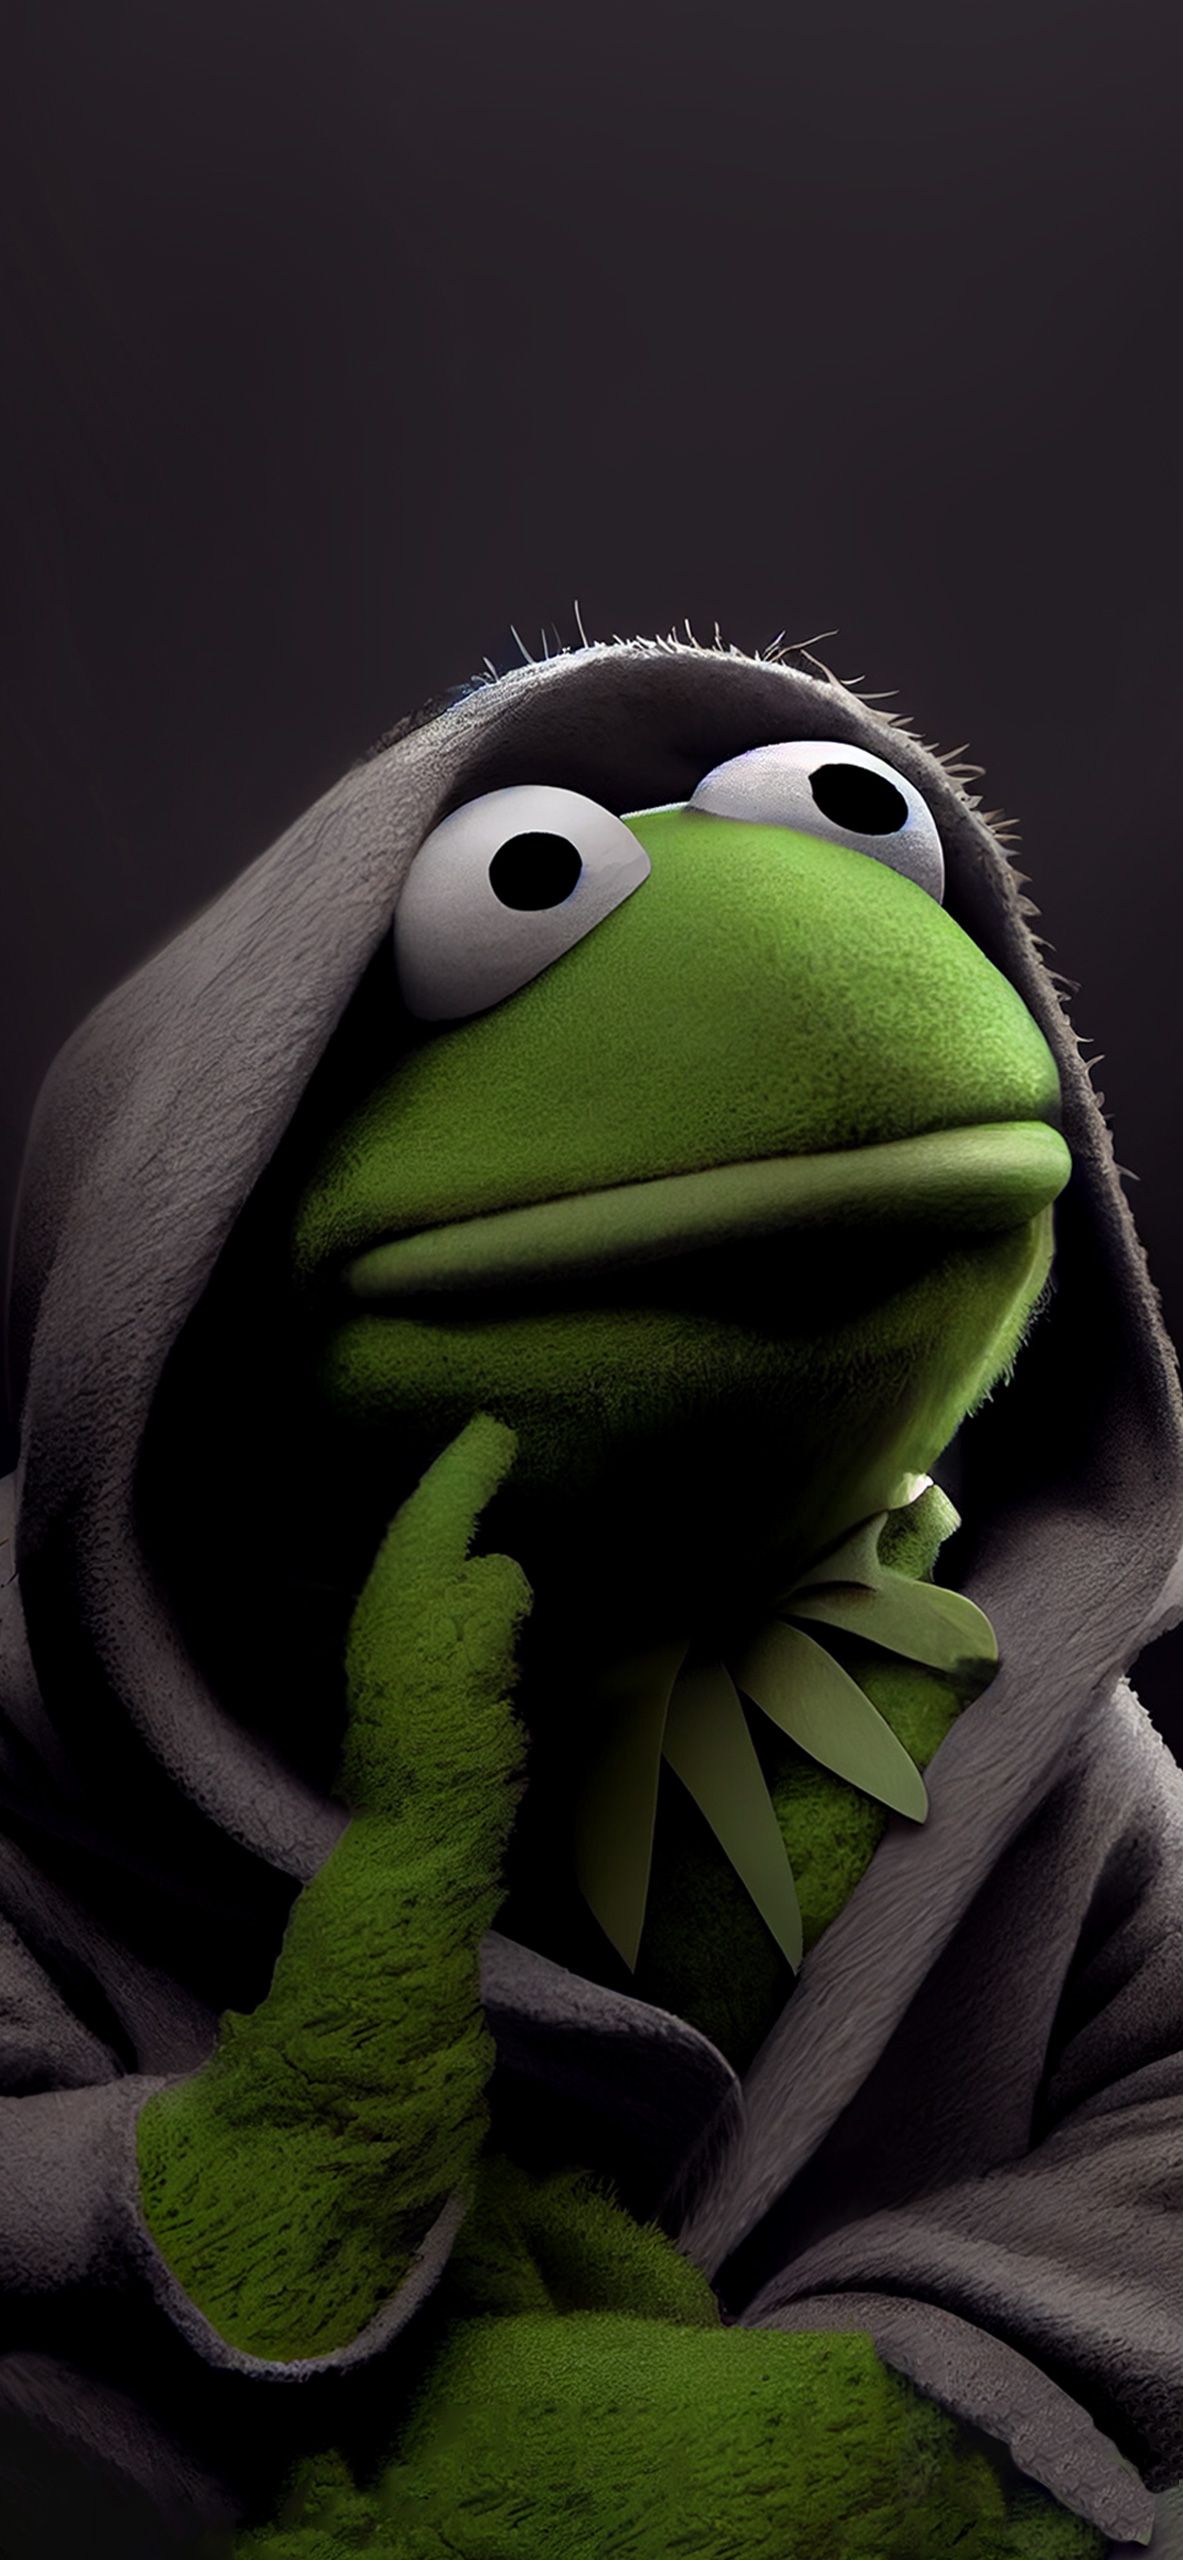 Kermit the Frog Jedi Meme Wallpaper Aesthetic Wallpaper